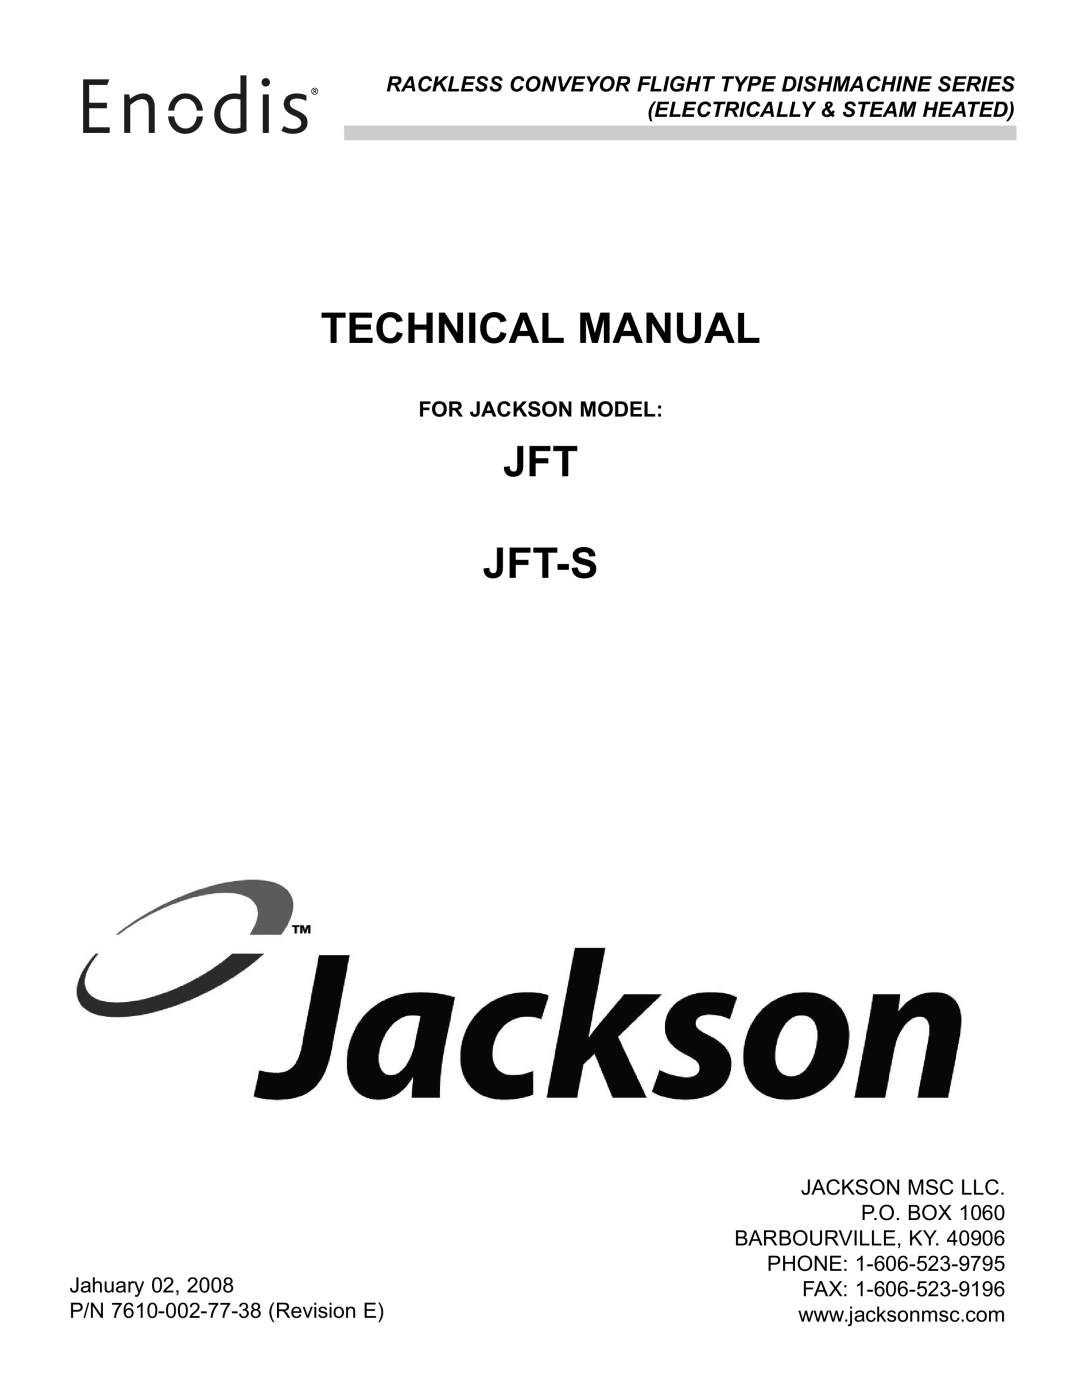 Jackson JFT technical manual Technical Manual, Jft Jft-S, For Jackson Model, Jackson Msc Llc, P.O. Box, Barbourville, Ky 